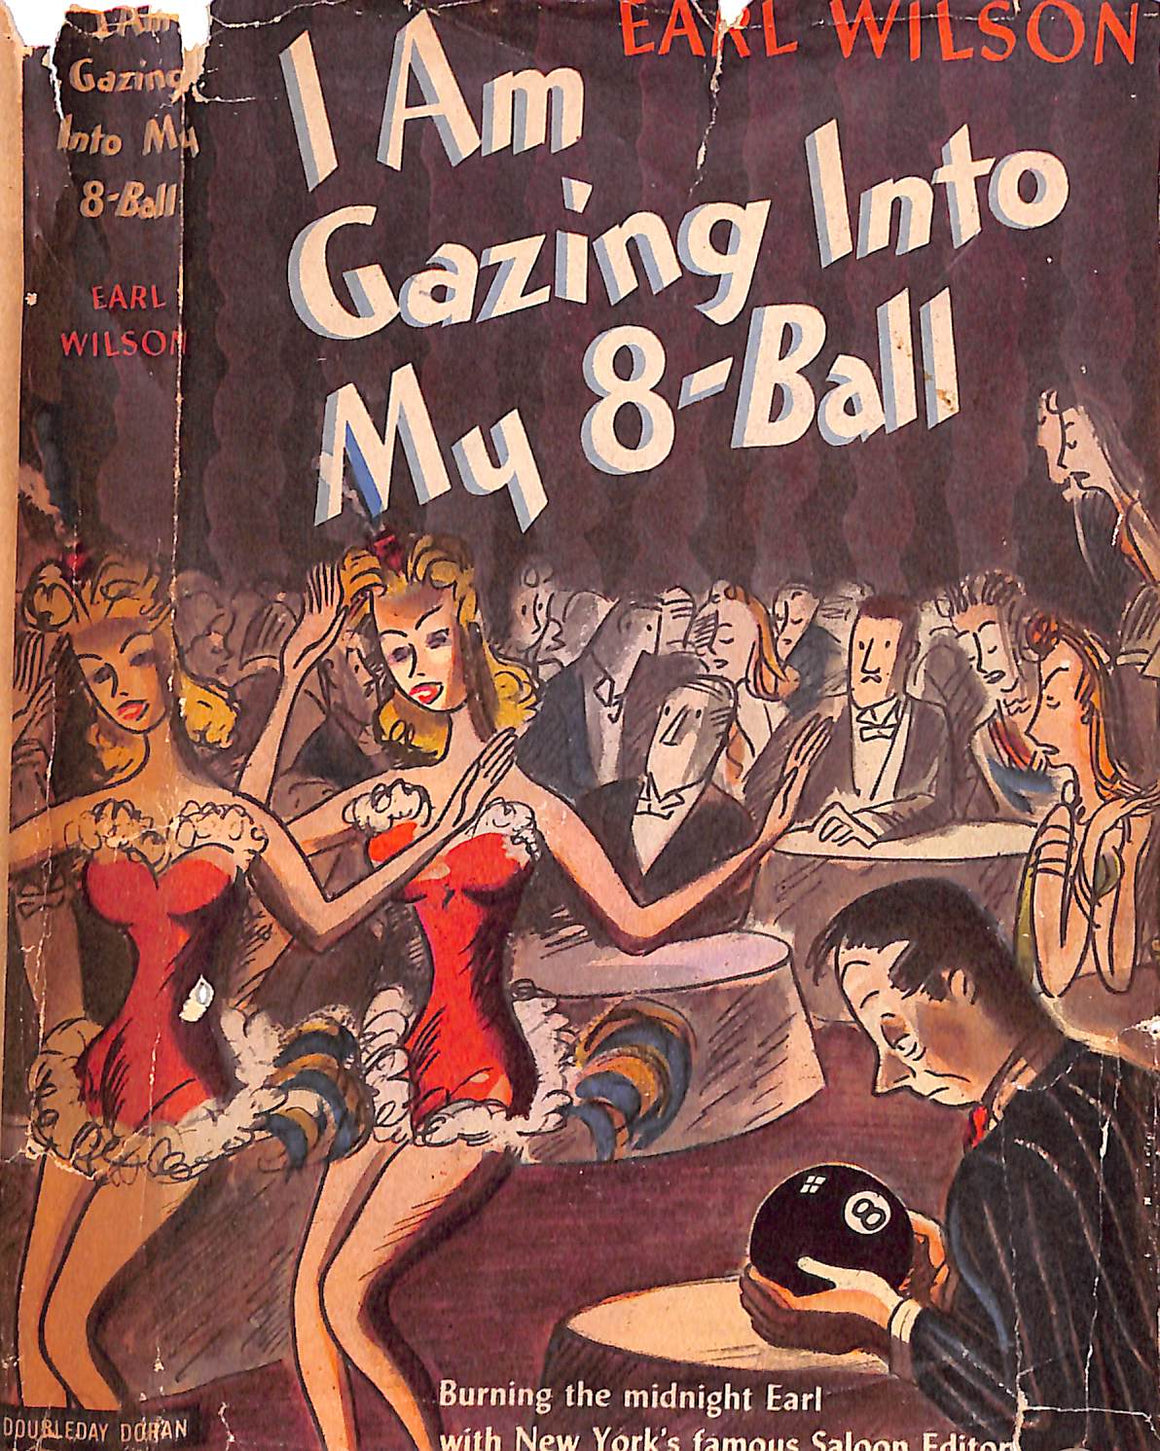 "I Am Gazing Into My 8-Ball" 1945 WILSON, Earl